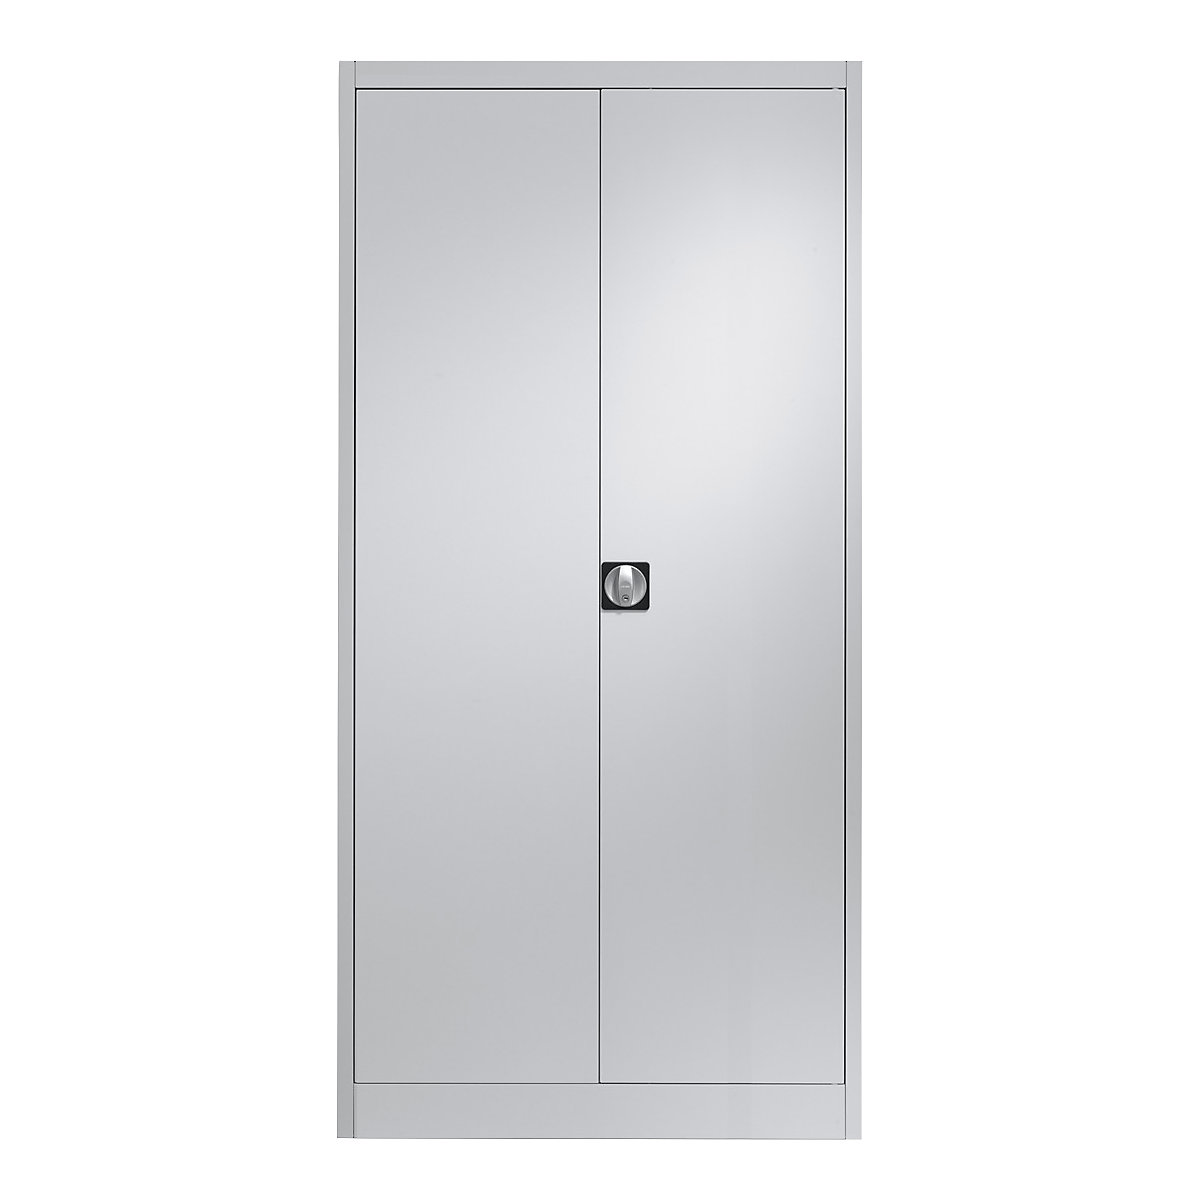 Steel cabinet with double doors - mauser